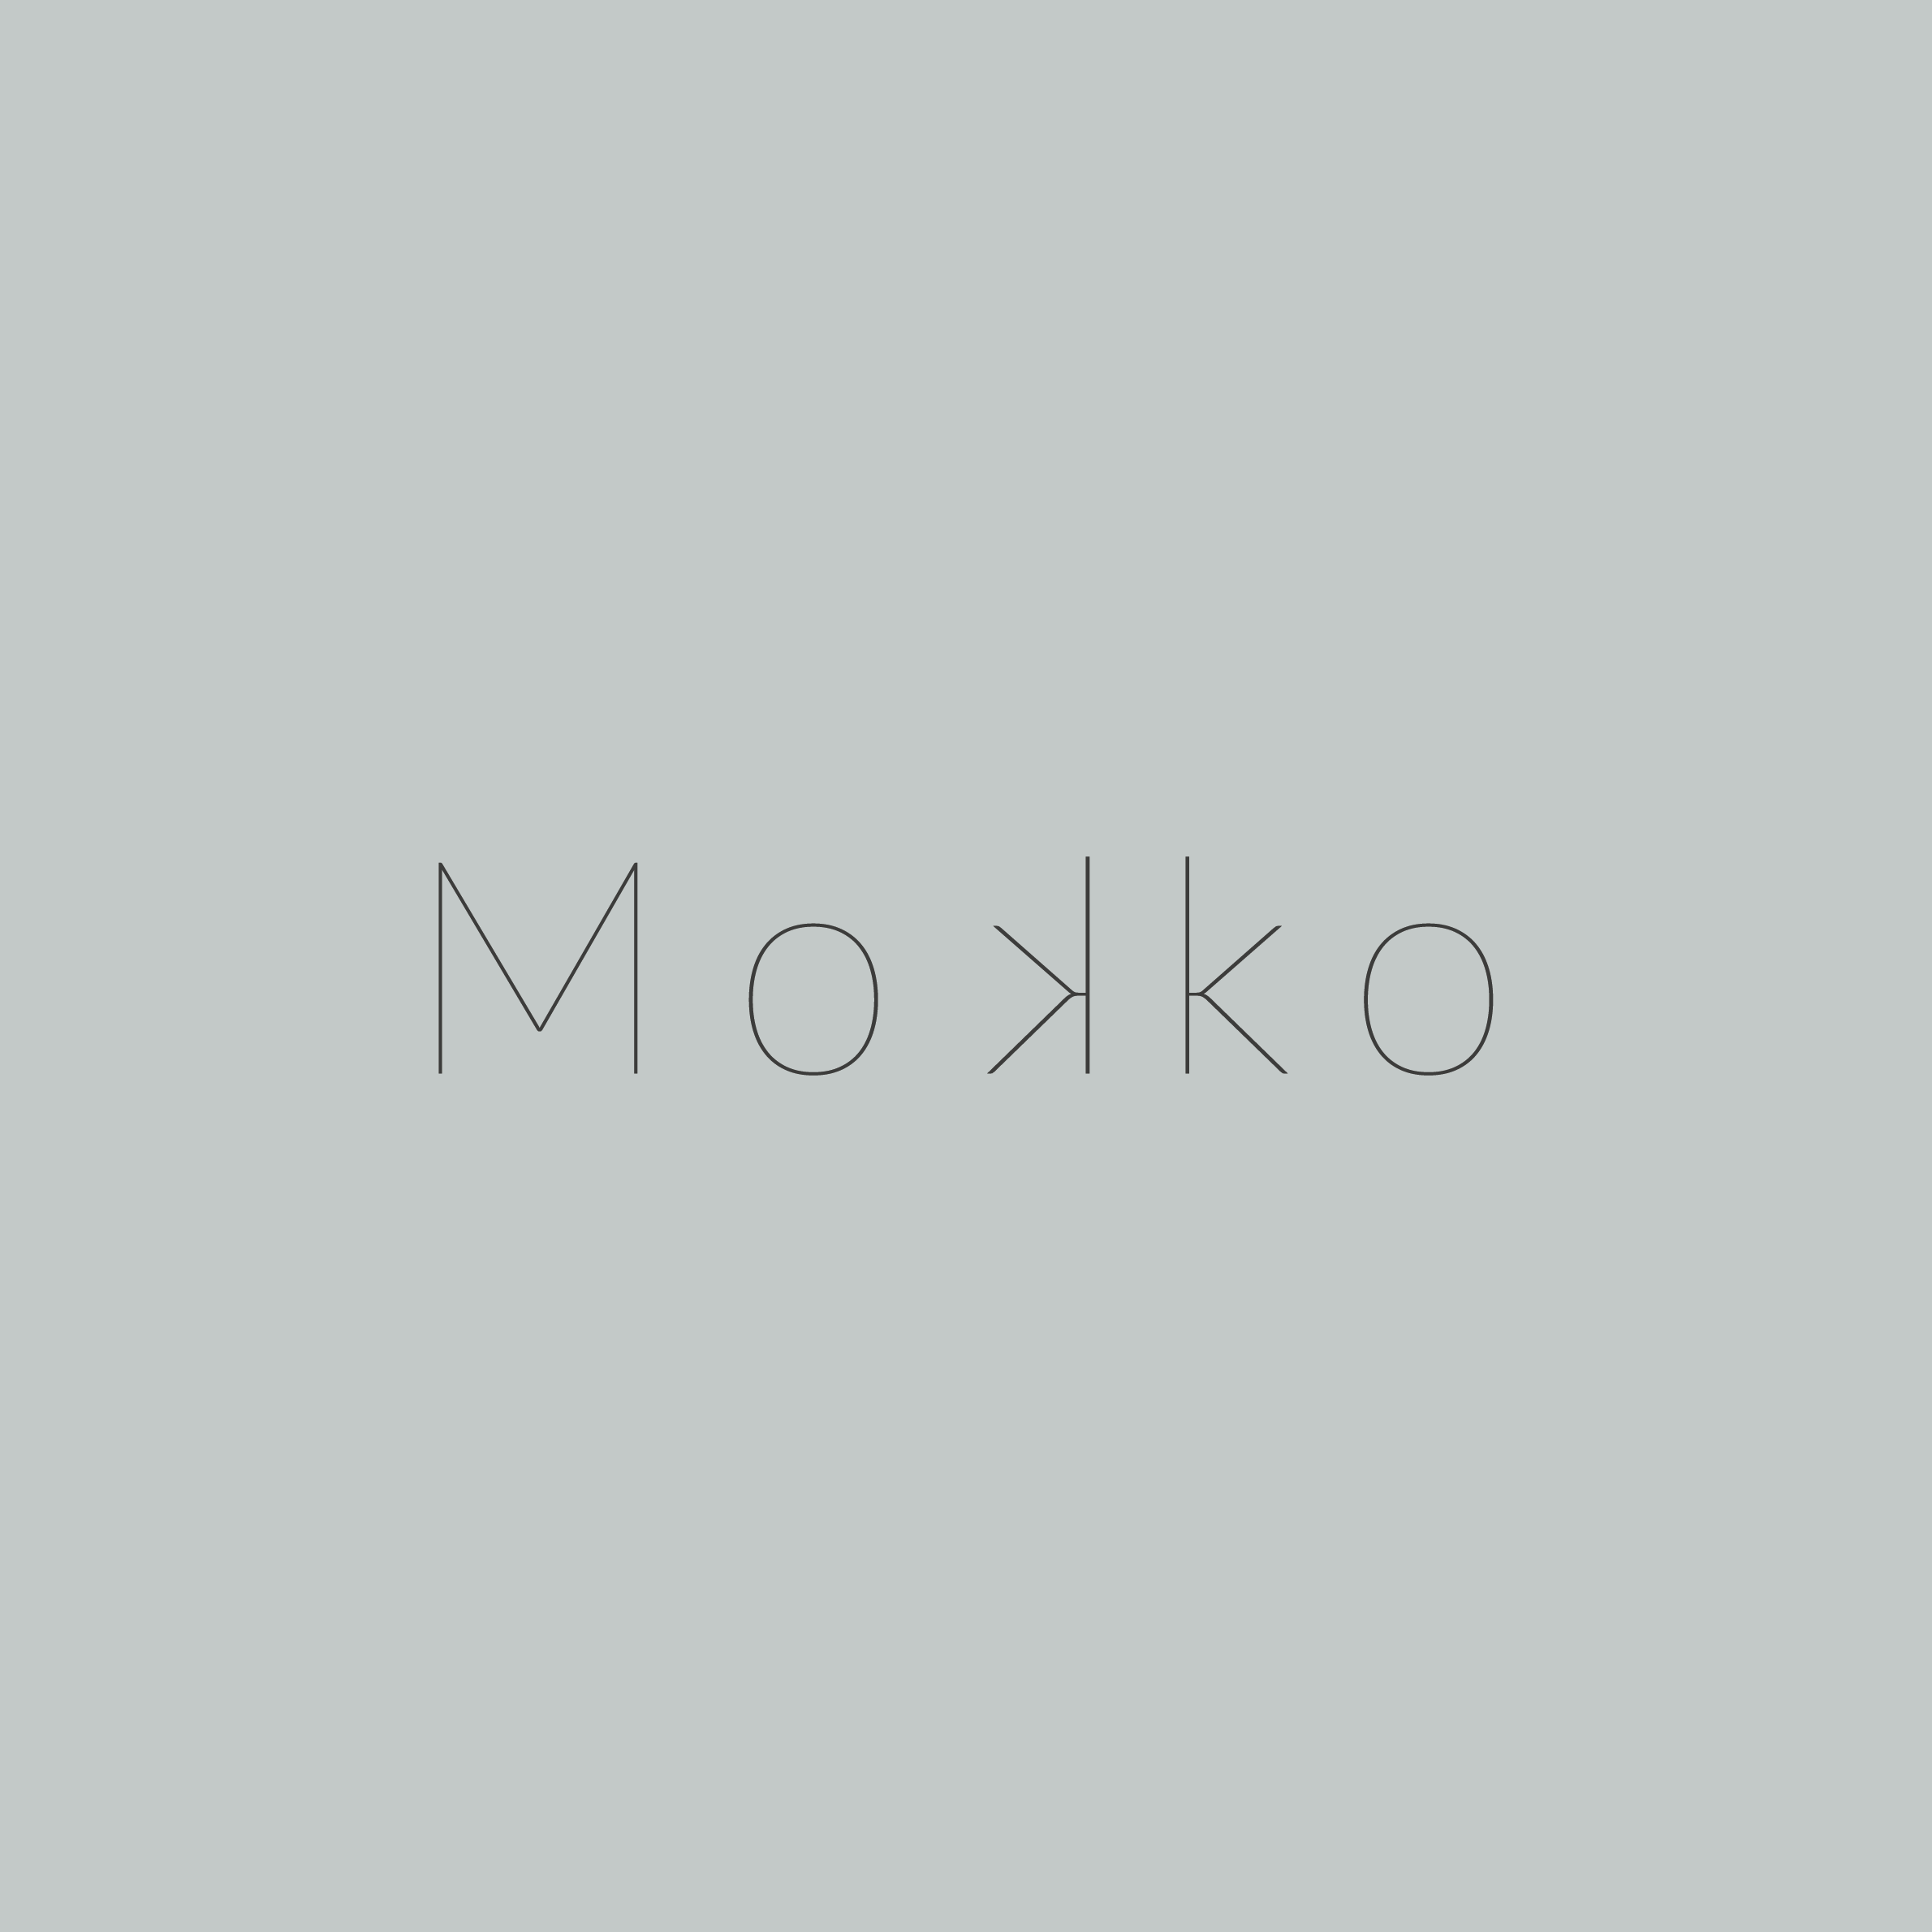 Mokko-11